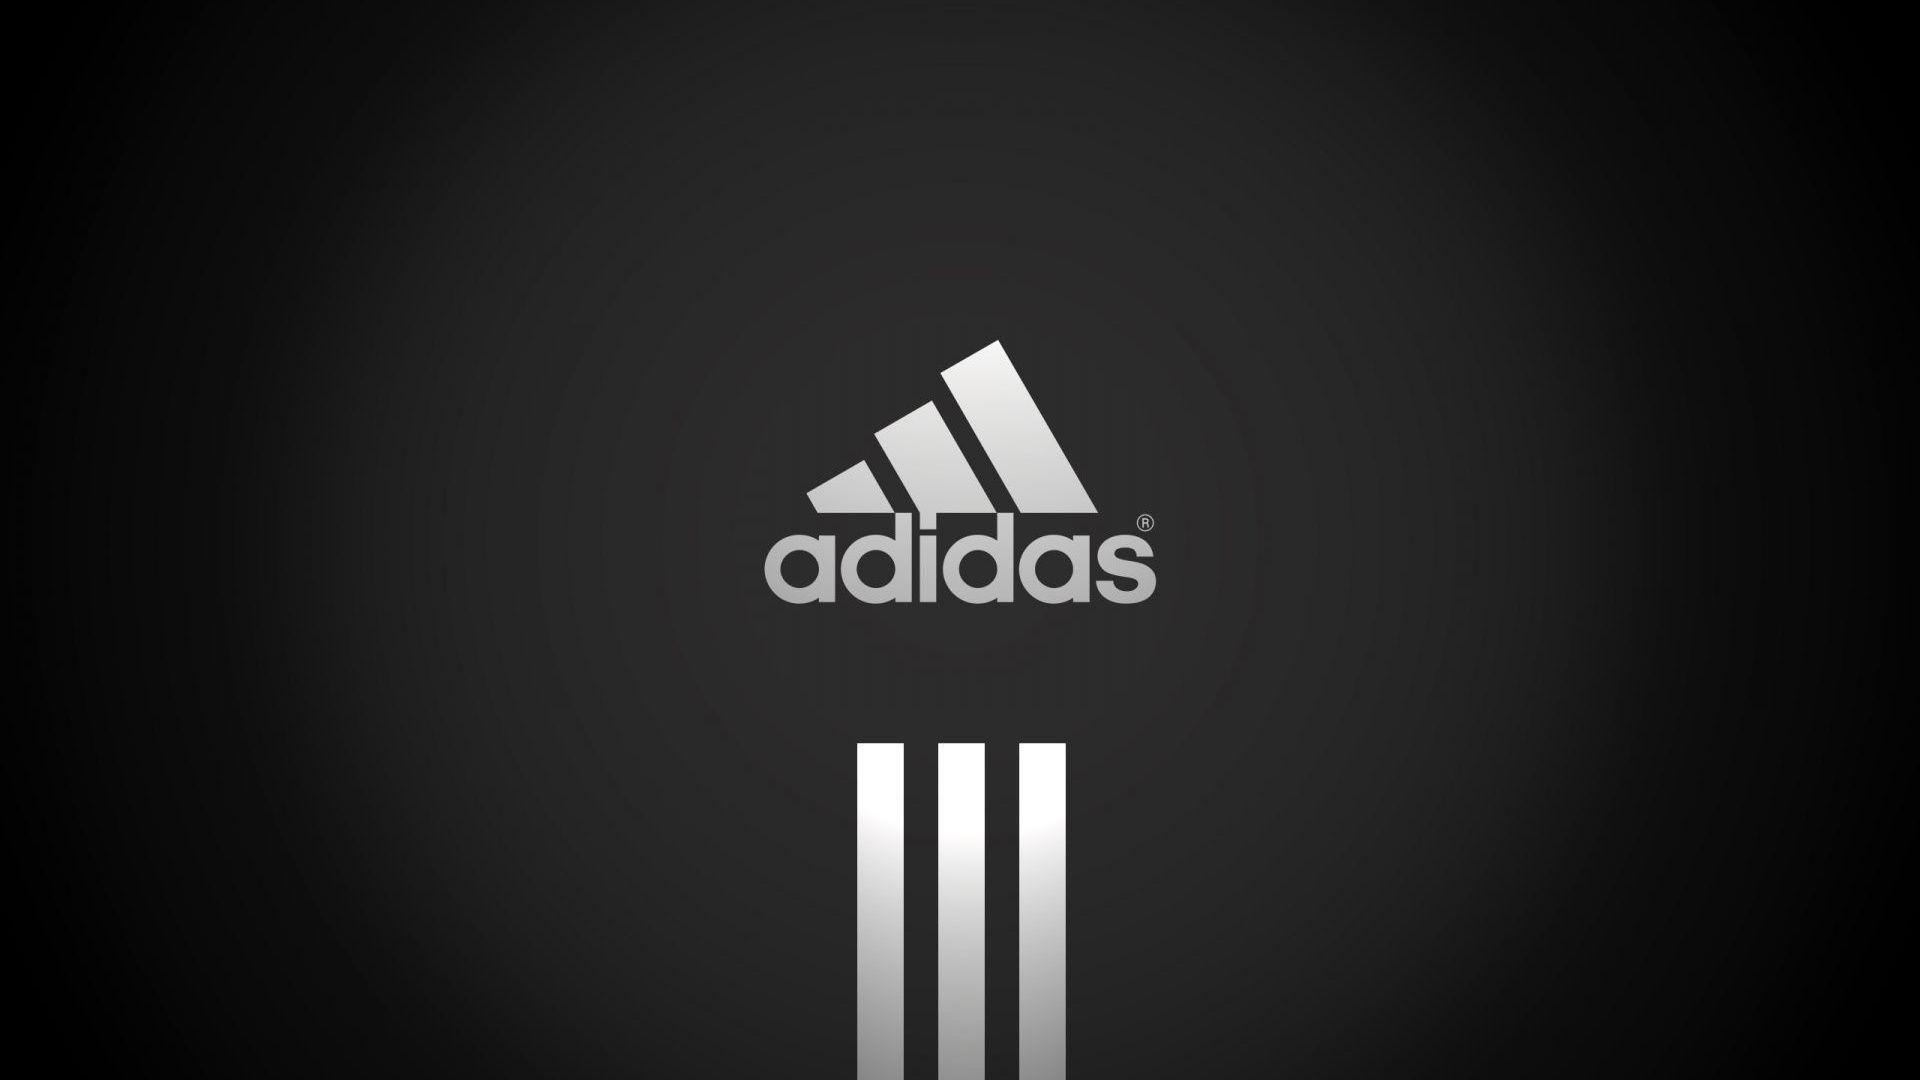 Adidas Black 1080p Hd Logo Desktop Wallpaper